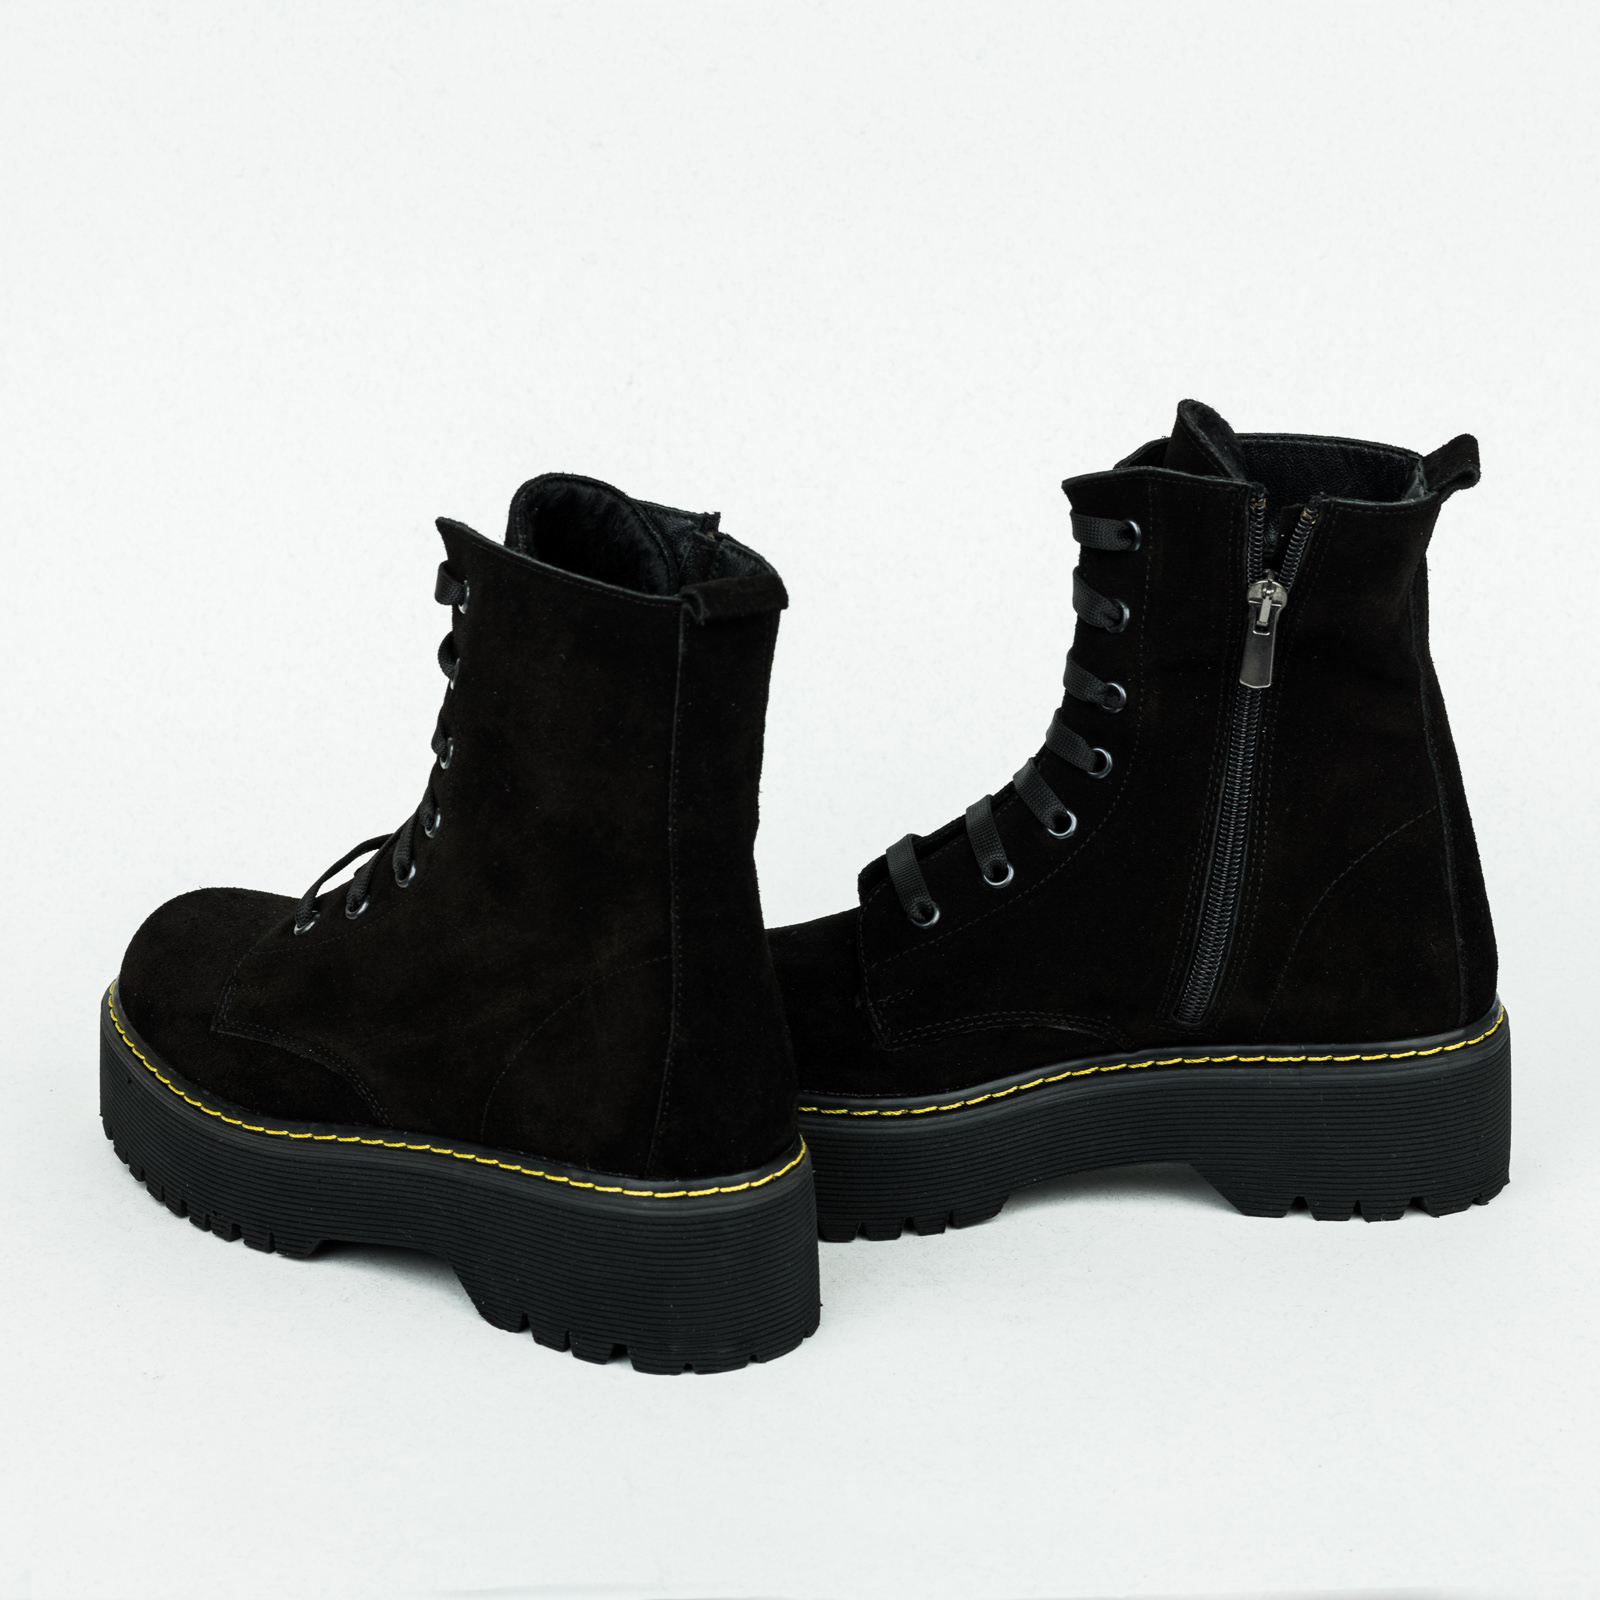 Leather WATERPROOF boots B206 - BLACK